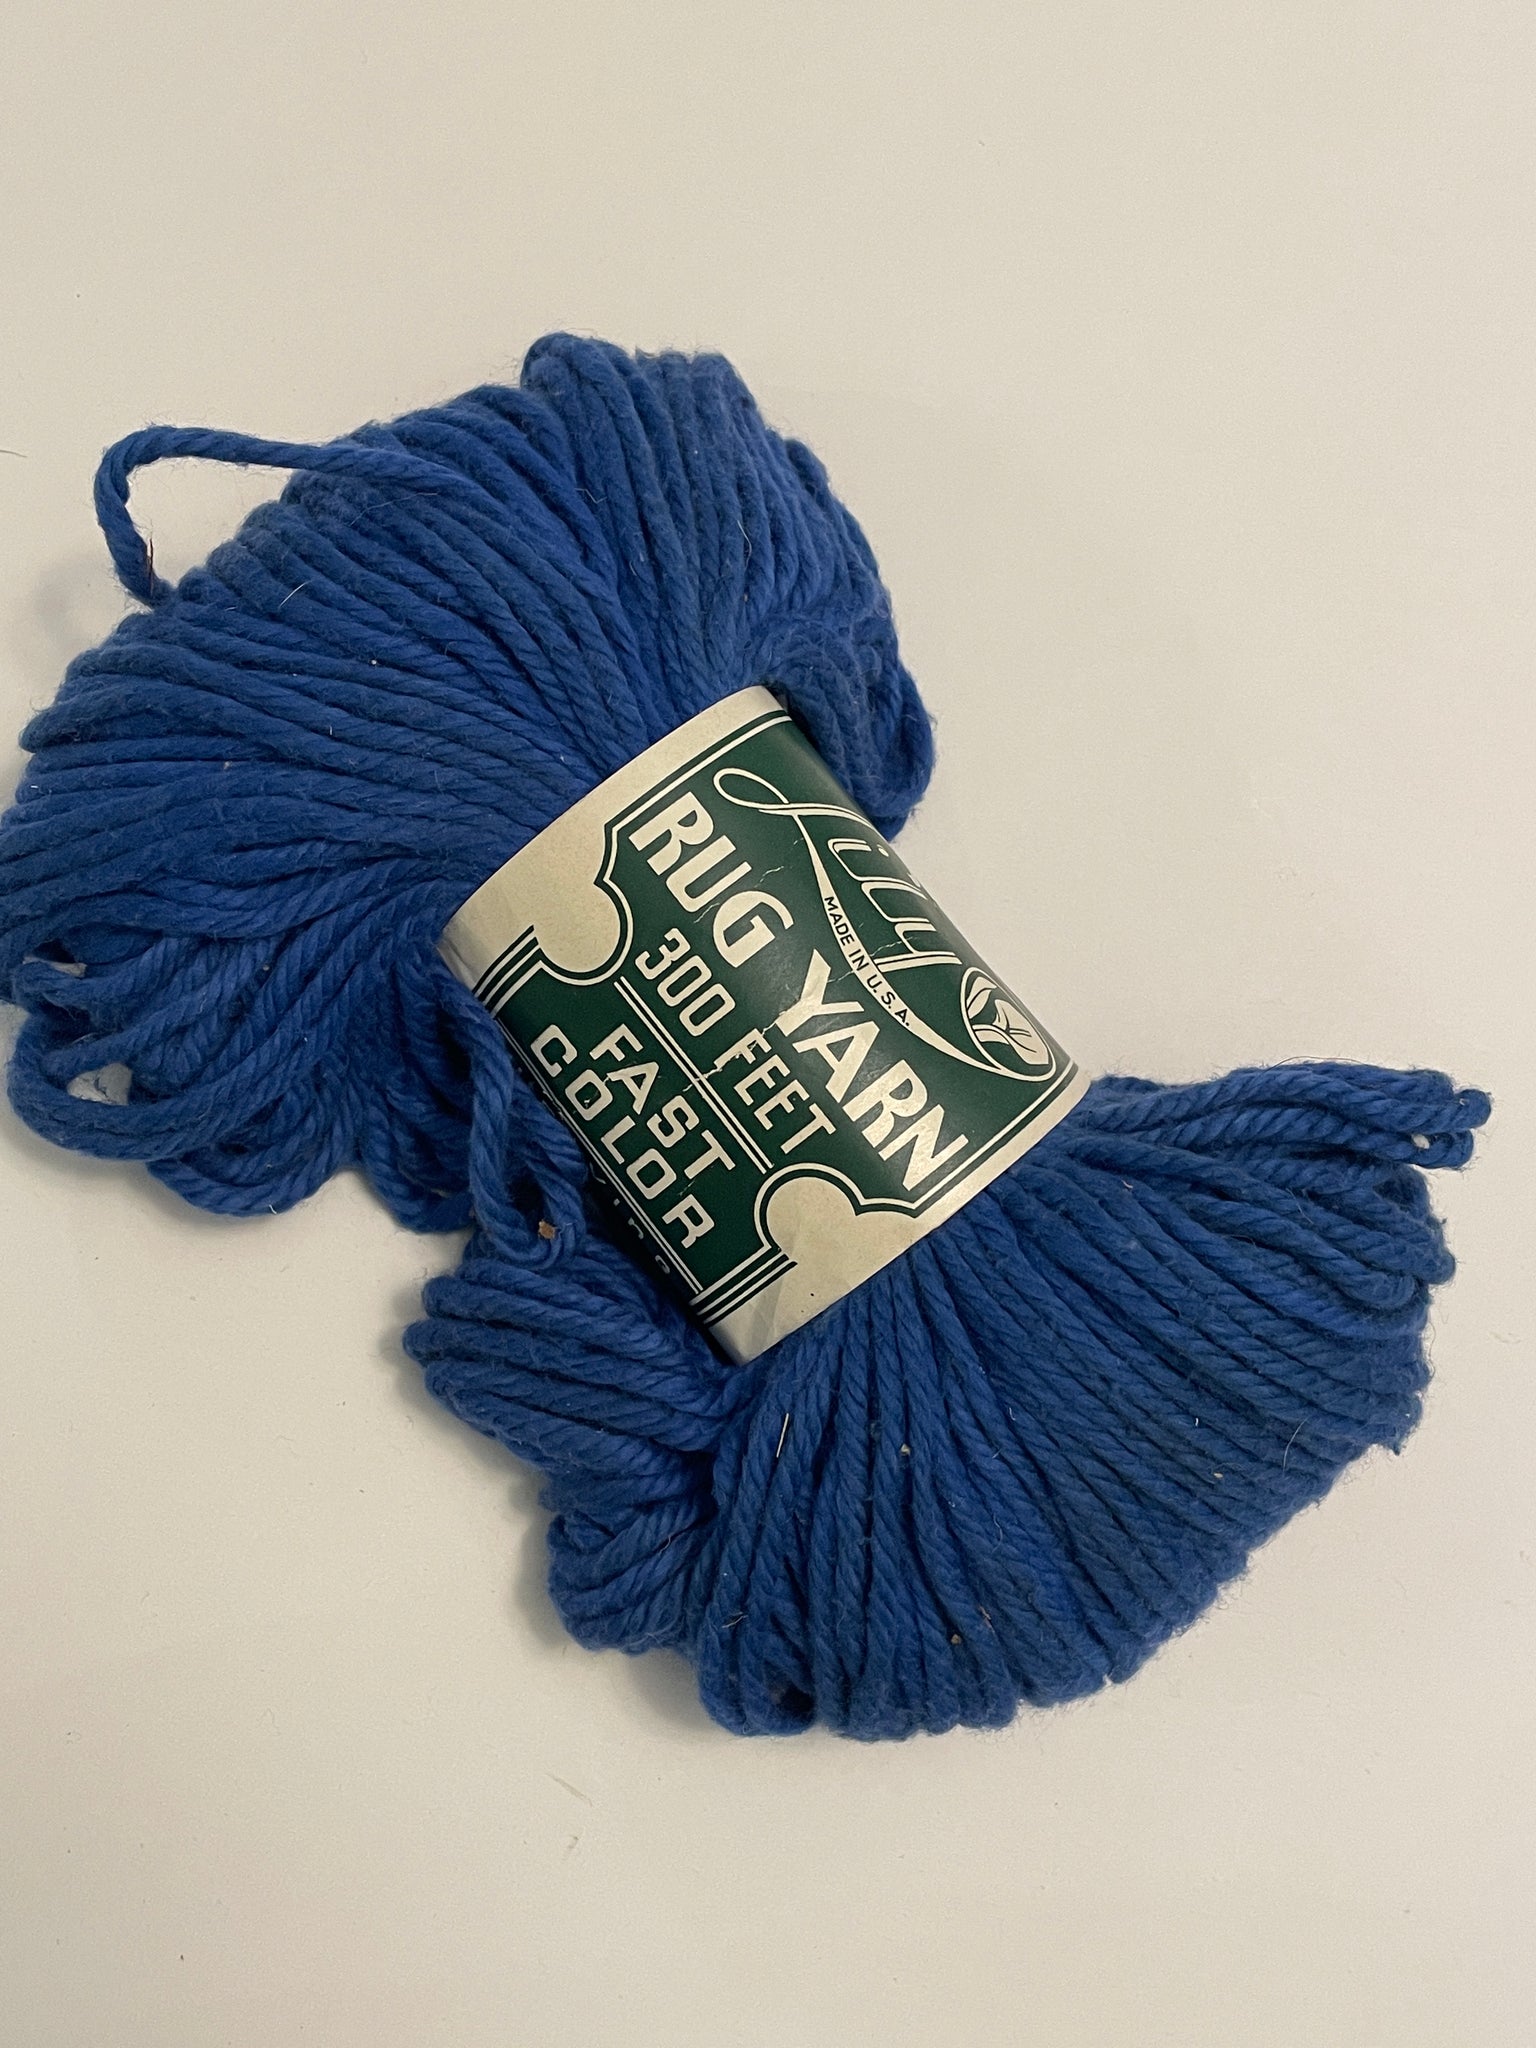 SALE Yarn Vintage Rug - Blue